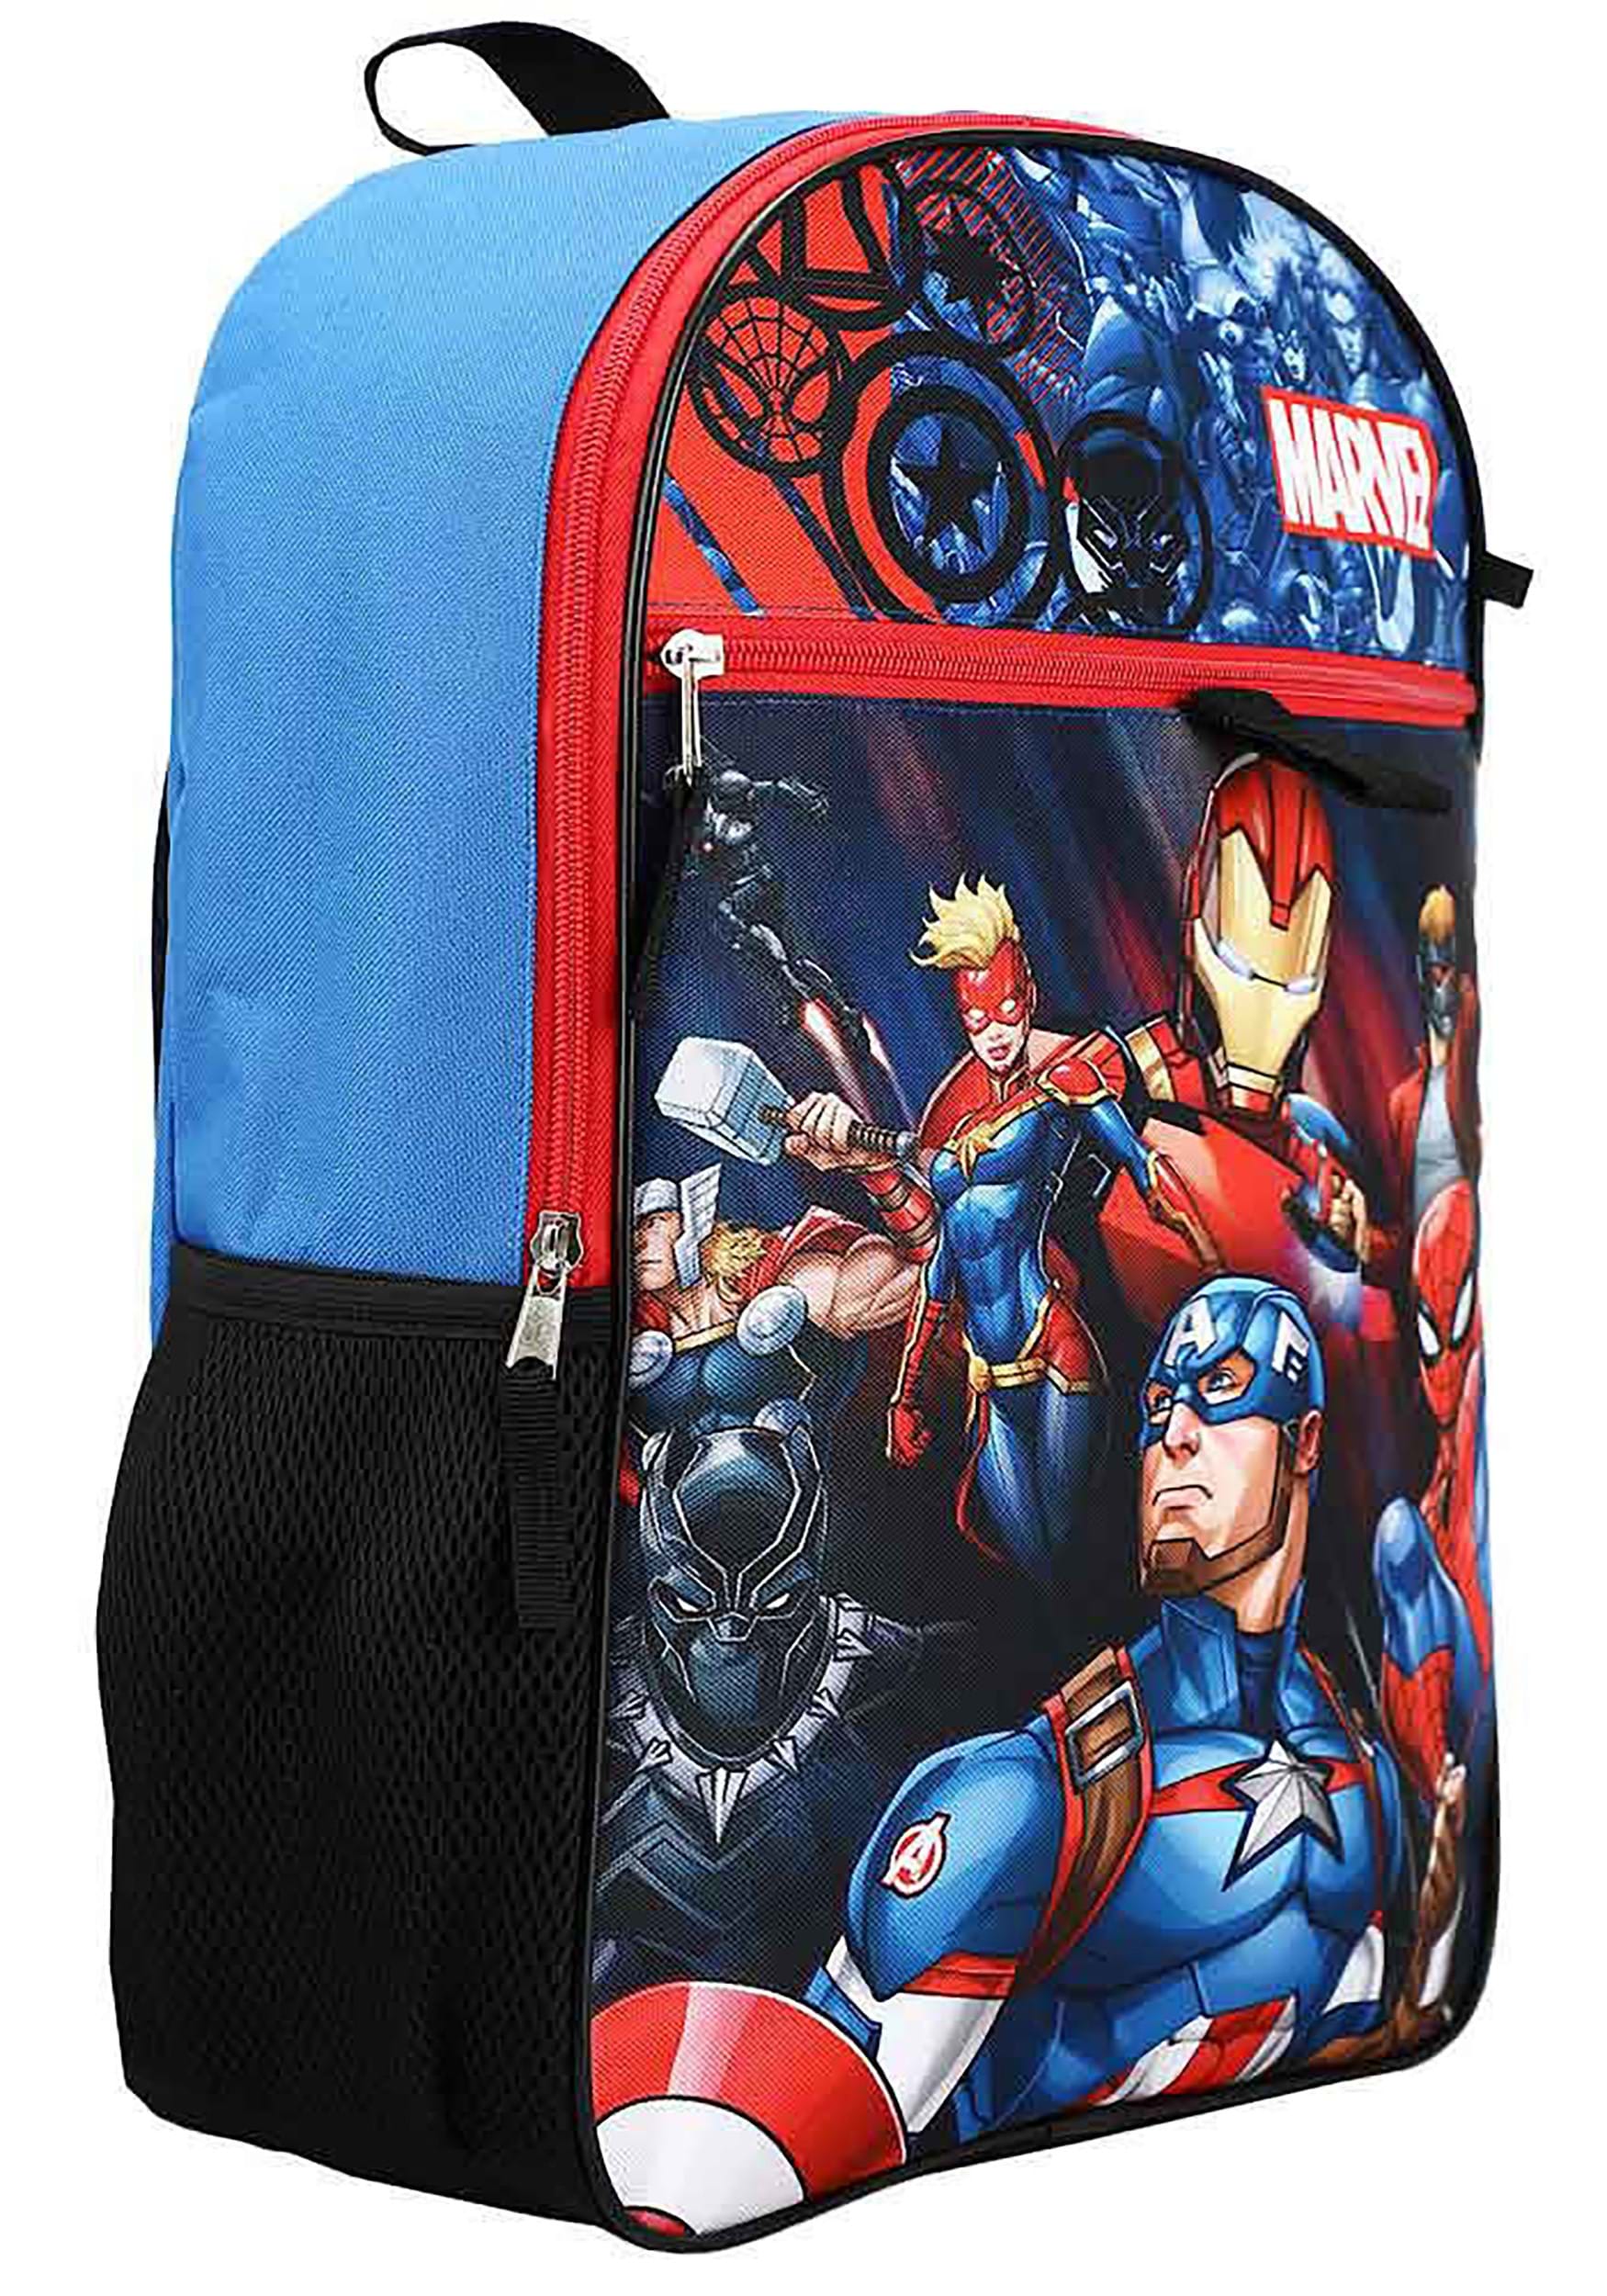 Marvel Heroes 6 Piece Backpack Set